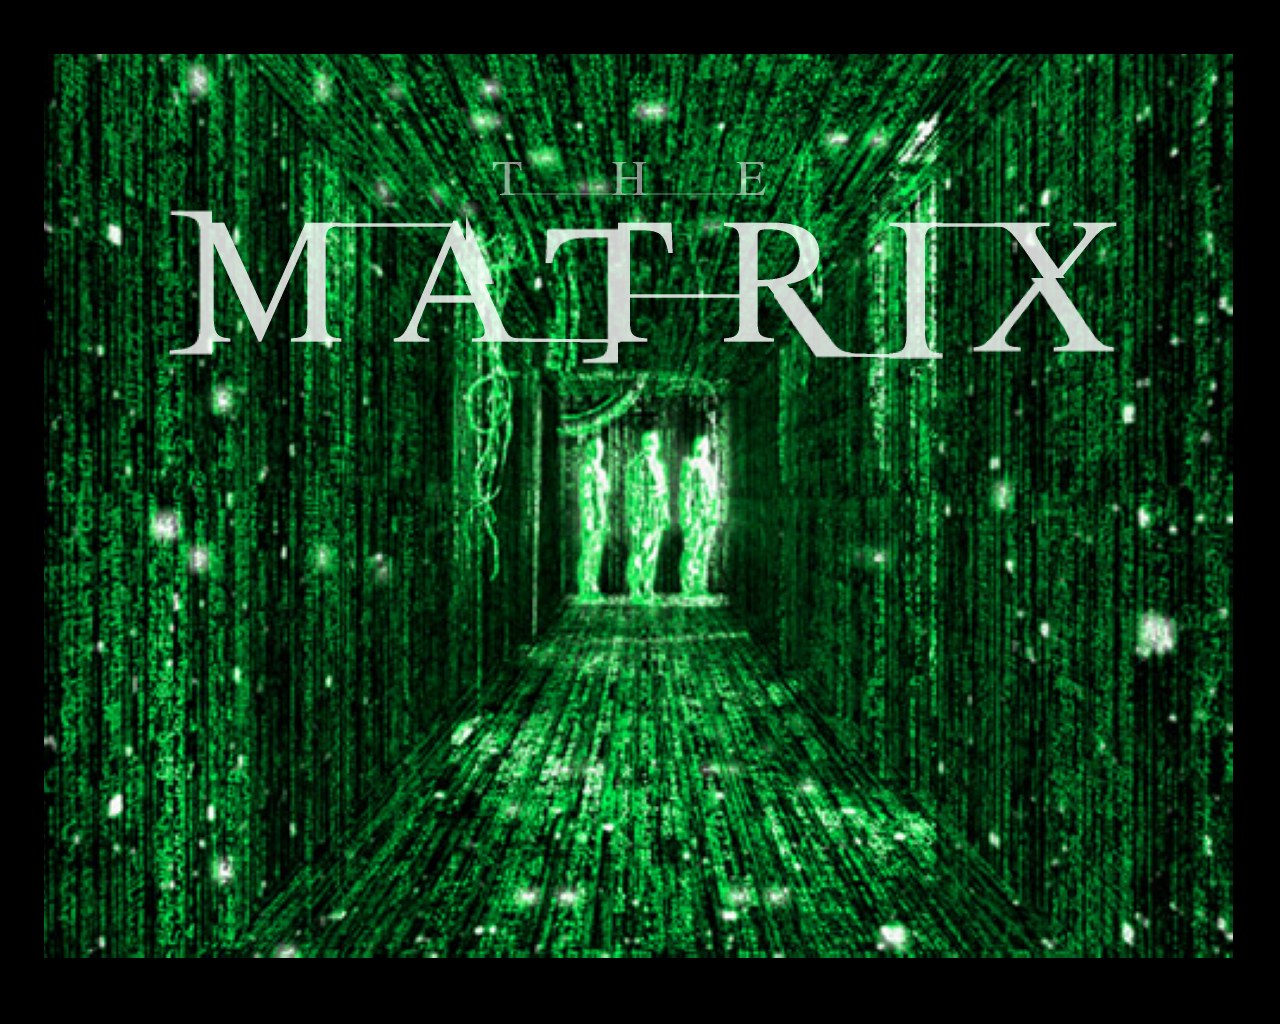 [matrix-04.jpg]